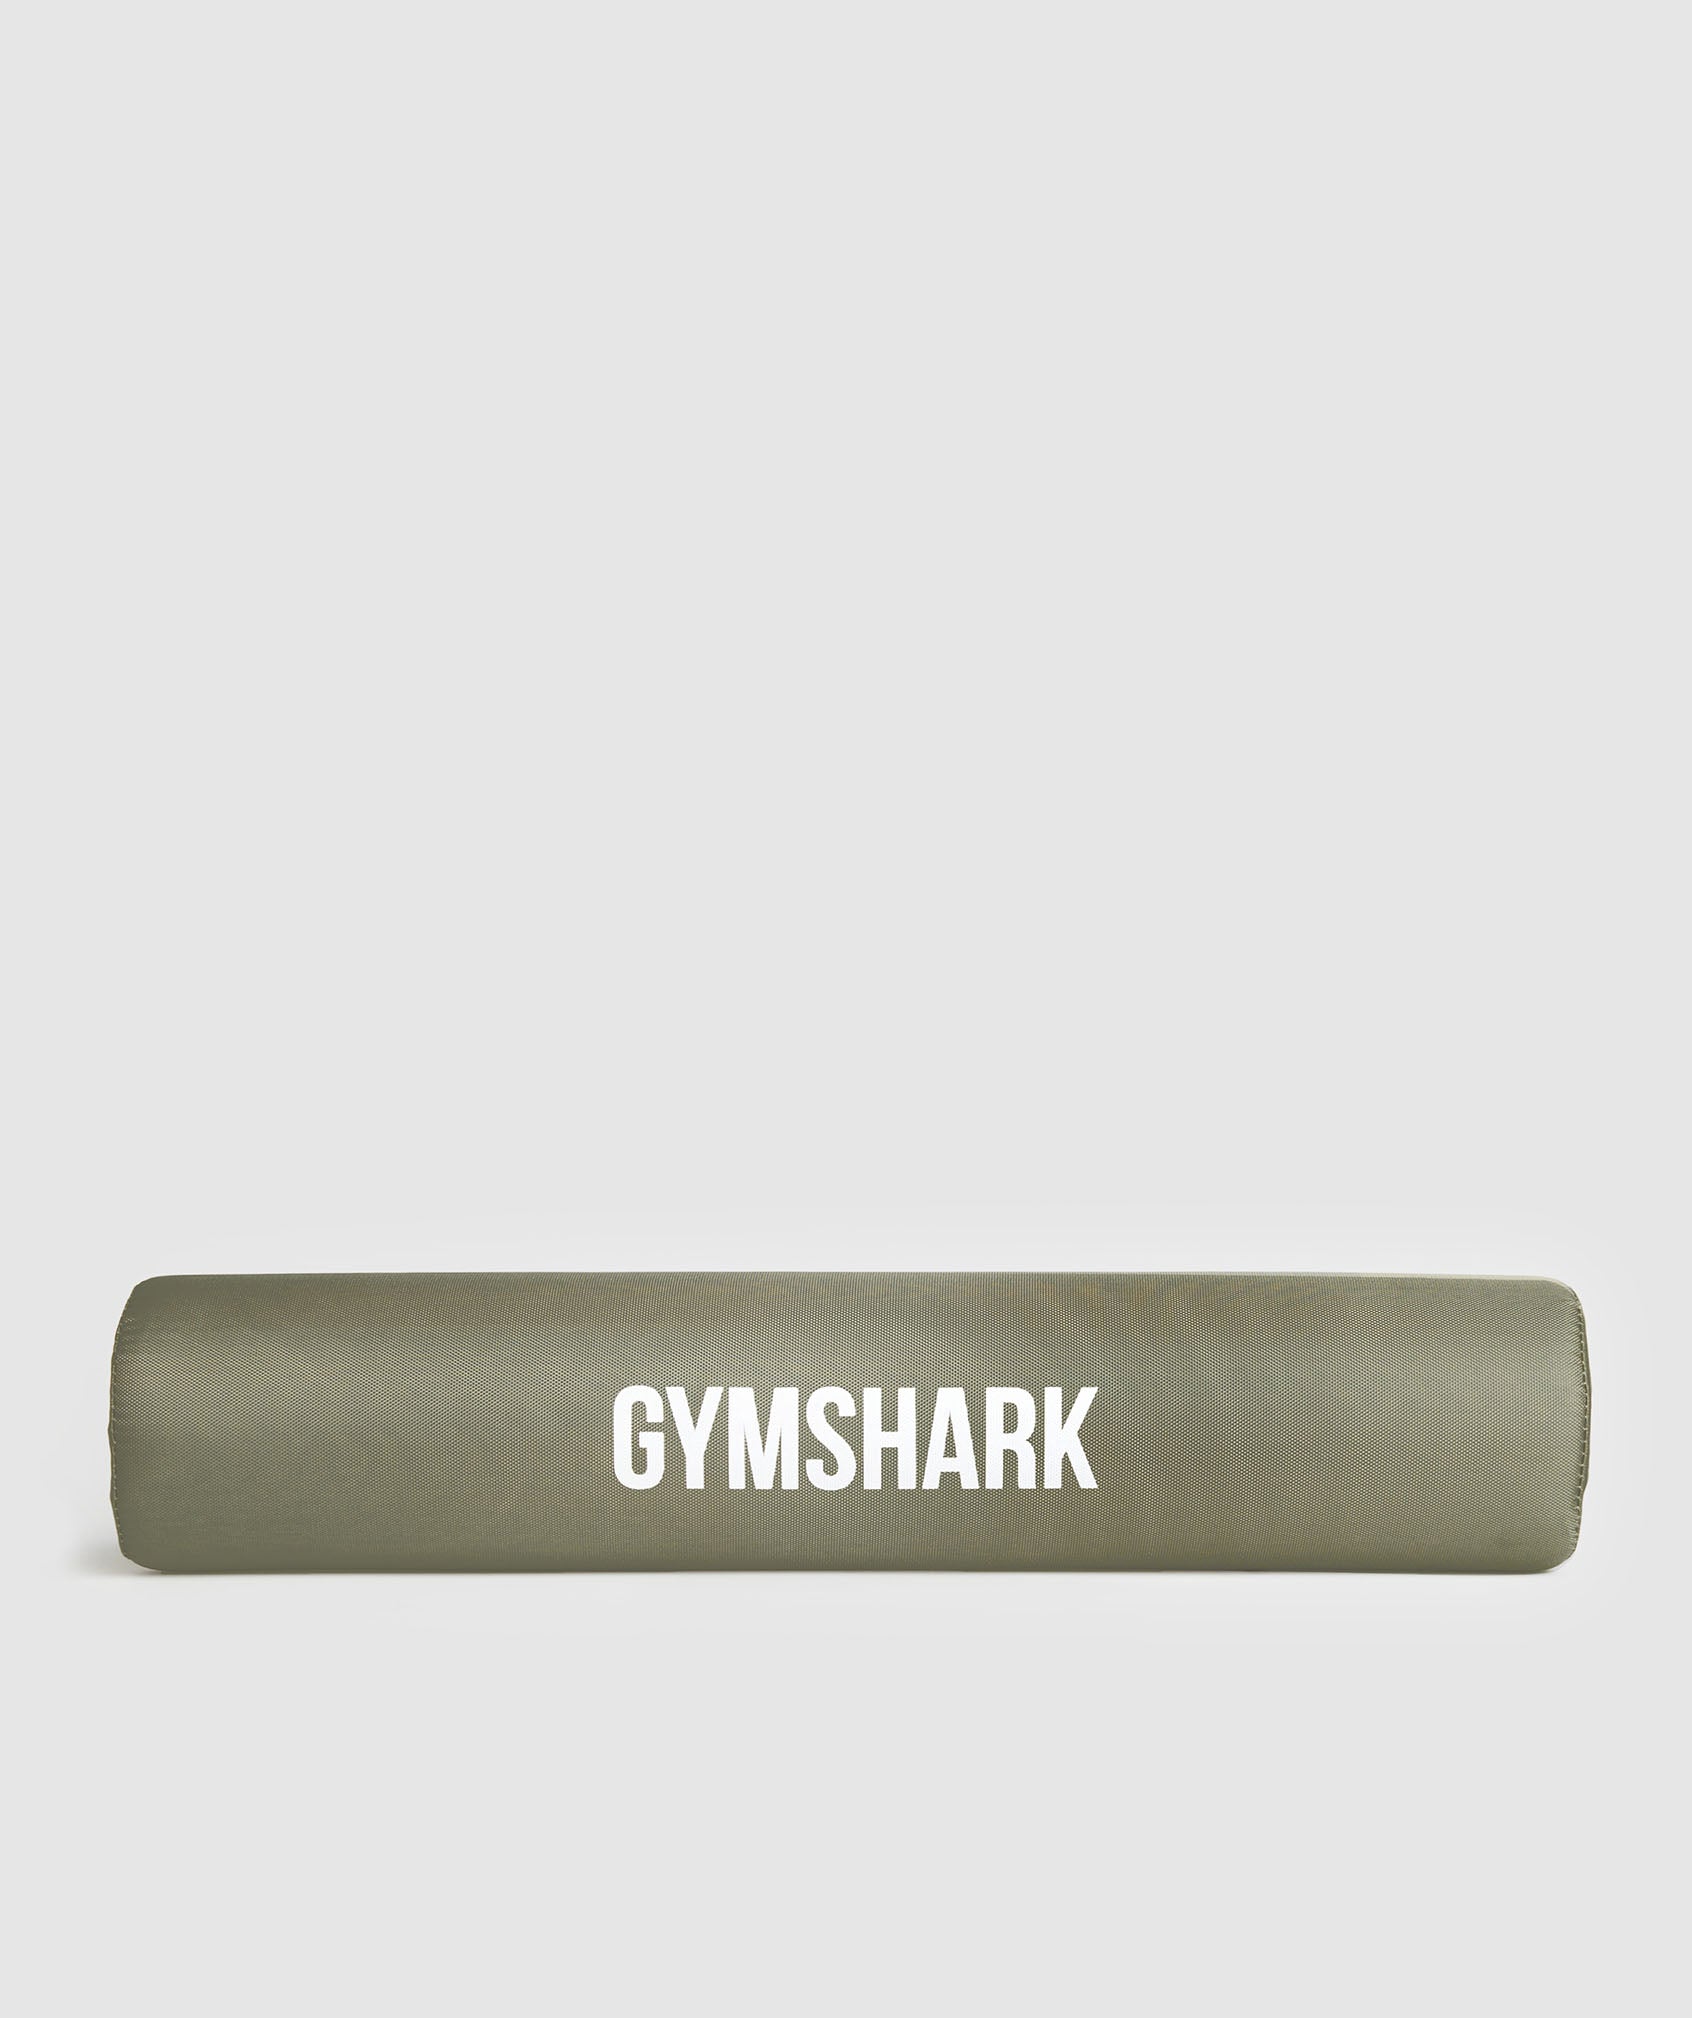 Gymshark Wraps - Black